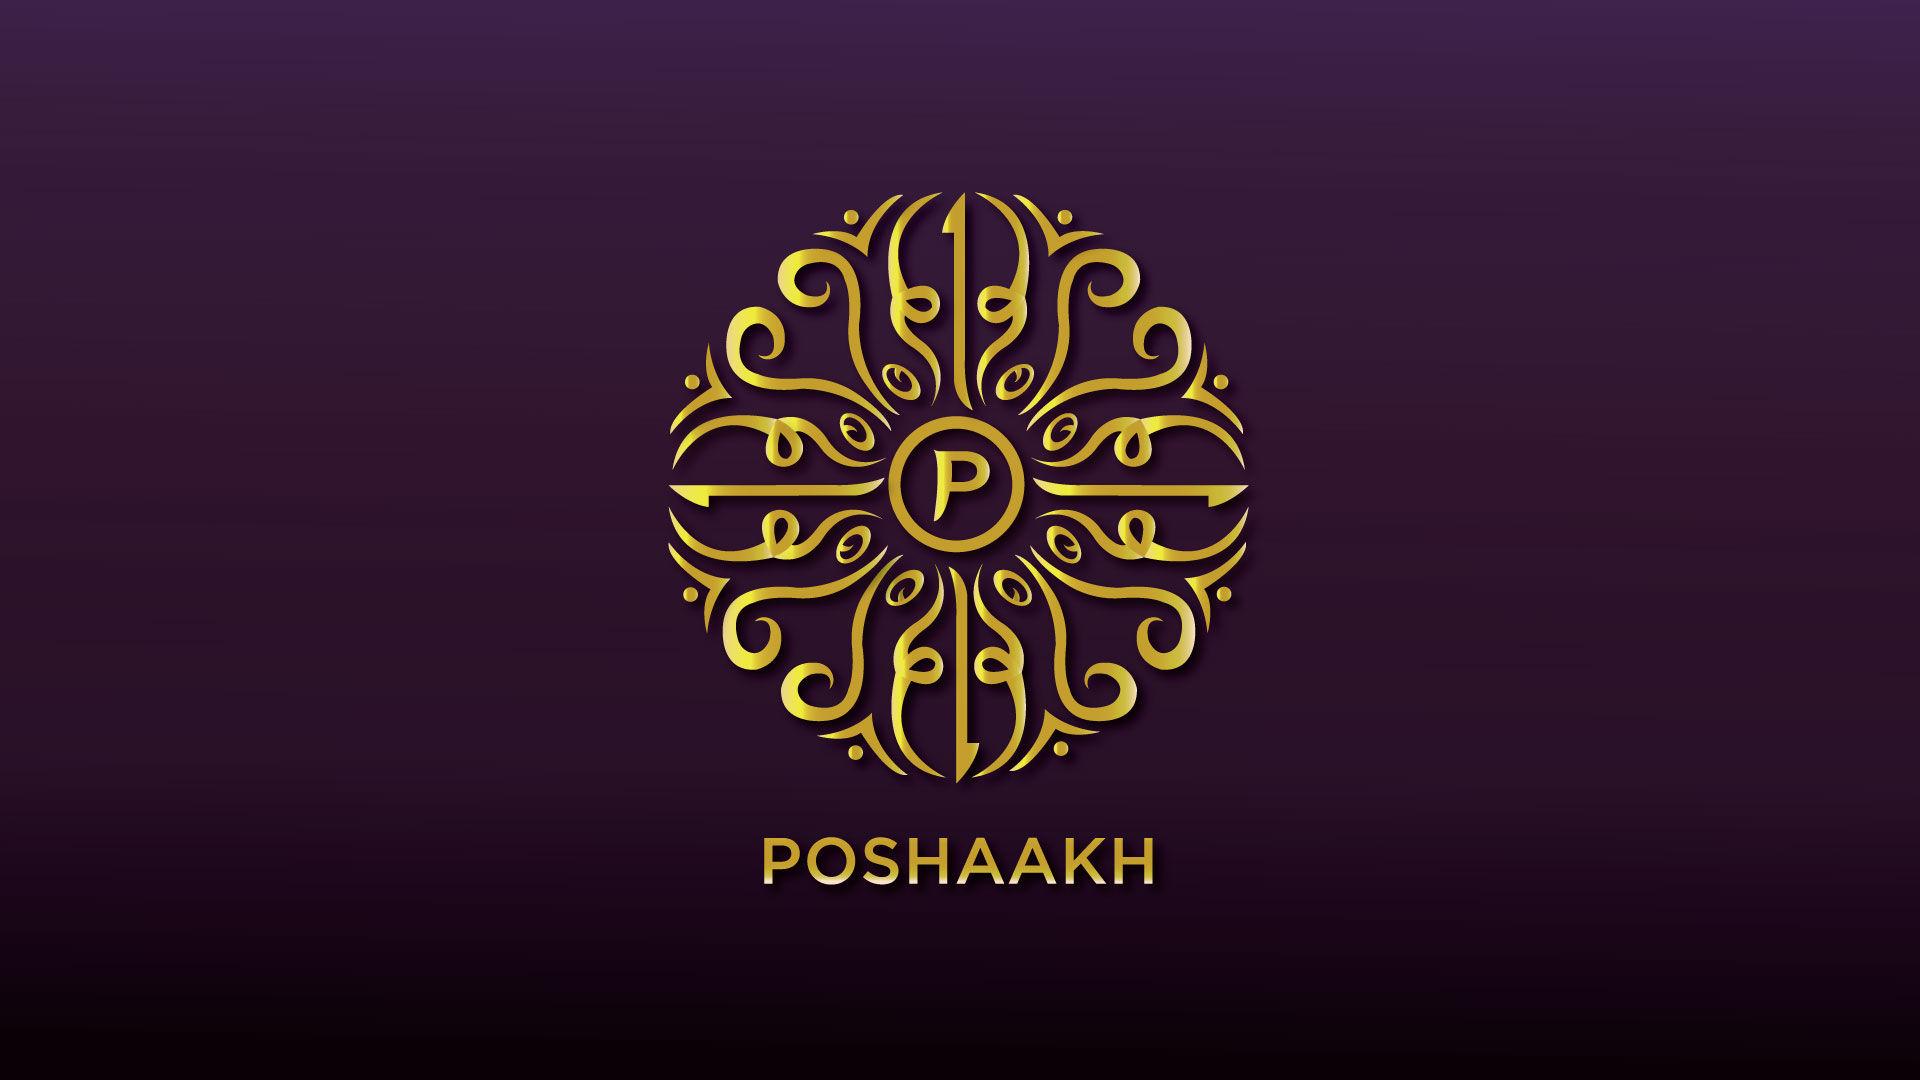 POSHAAKH